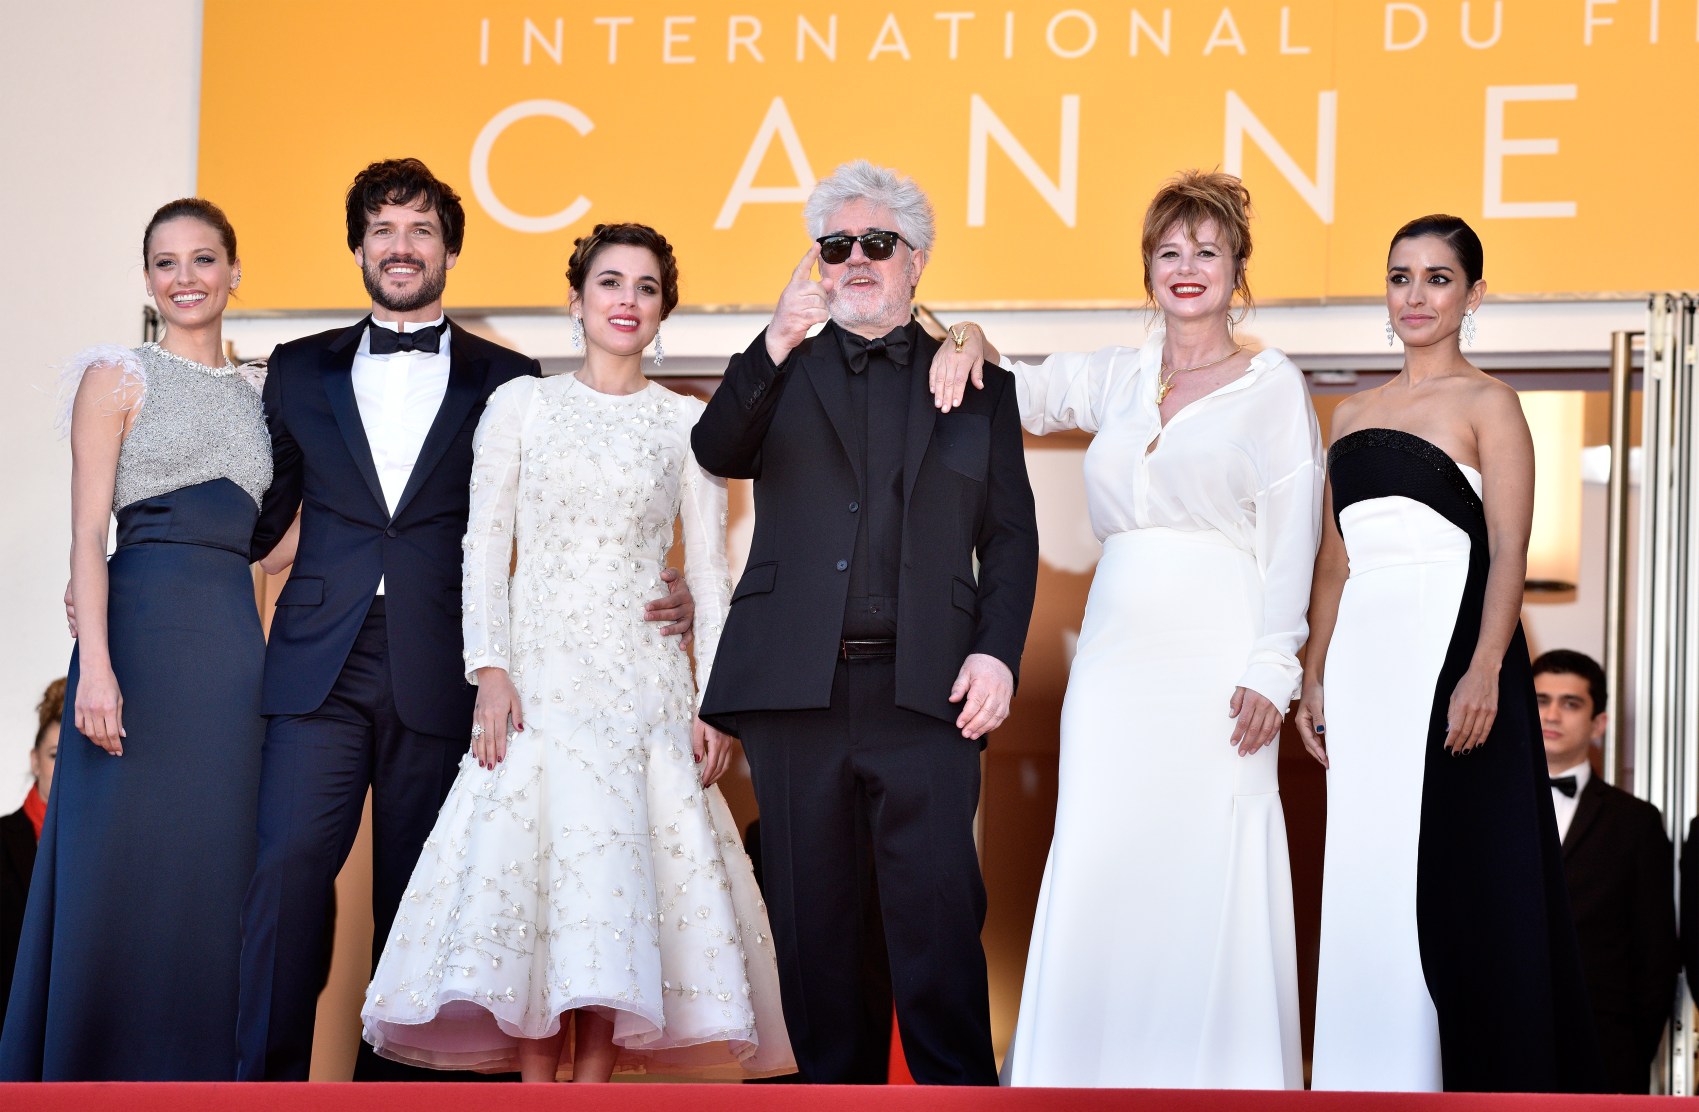 "Julieta" - Red Carpet Arrivals - The 69th Annual Cannes Film Festival